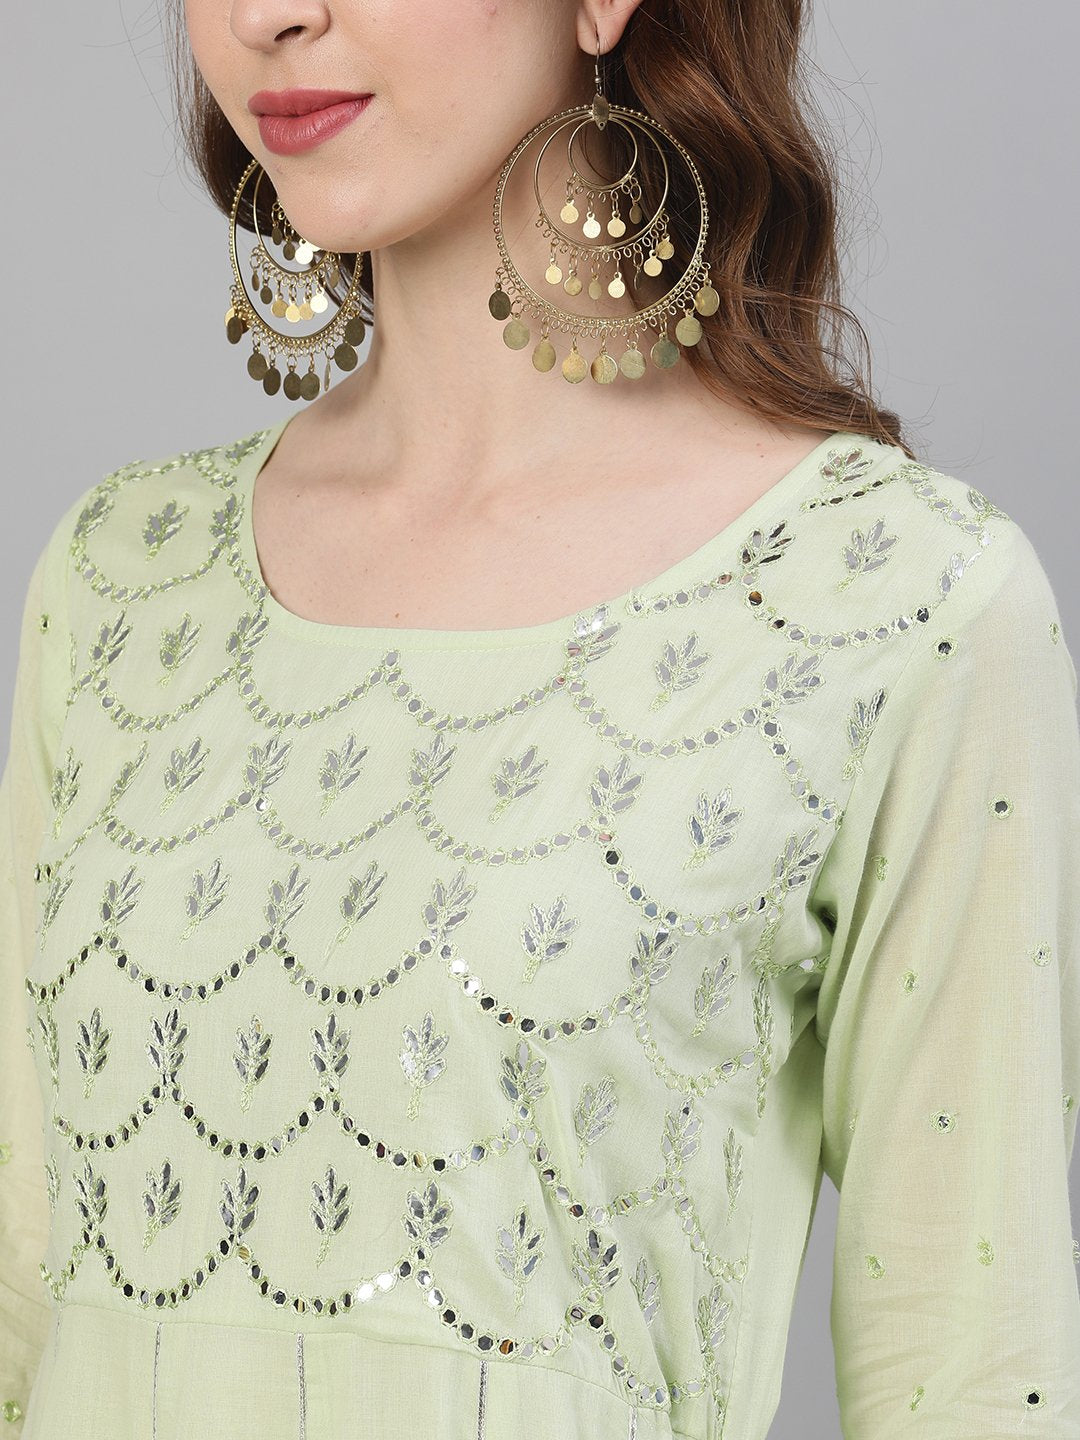 Ishin Women's Cotton Pista Green Embroidered Flared Dress